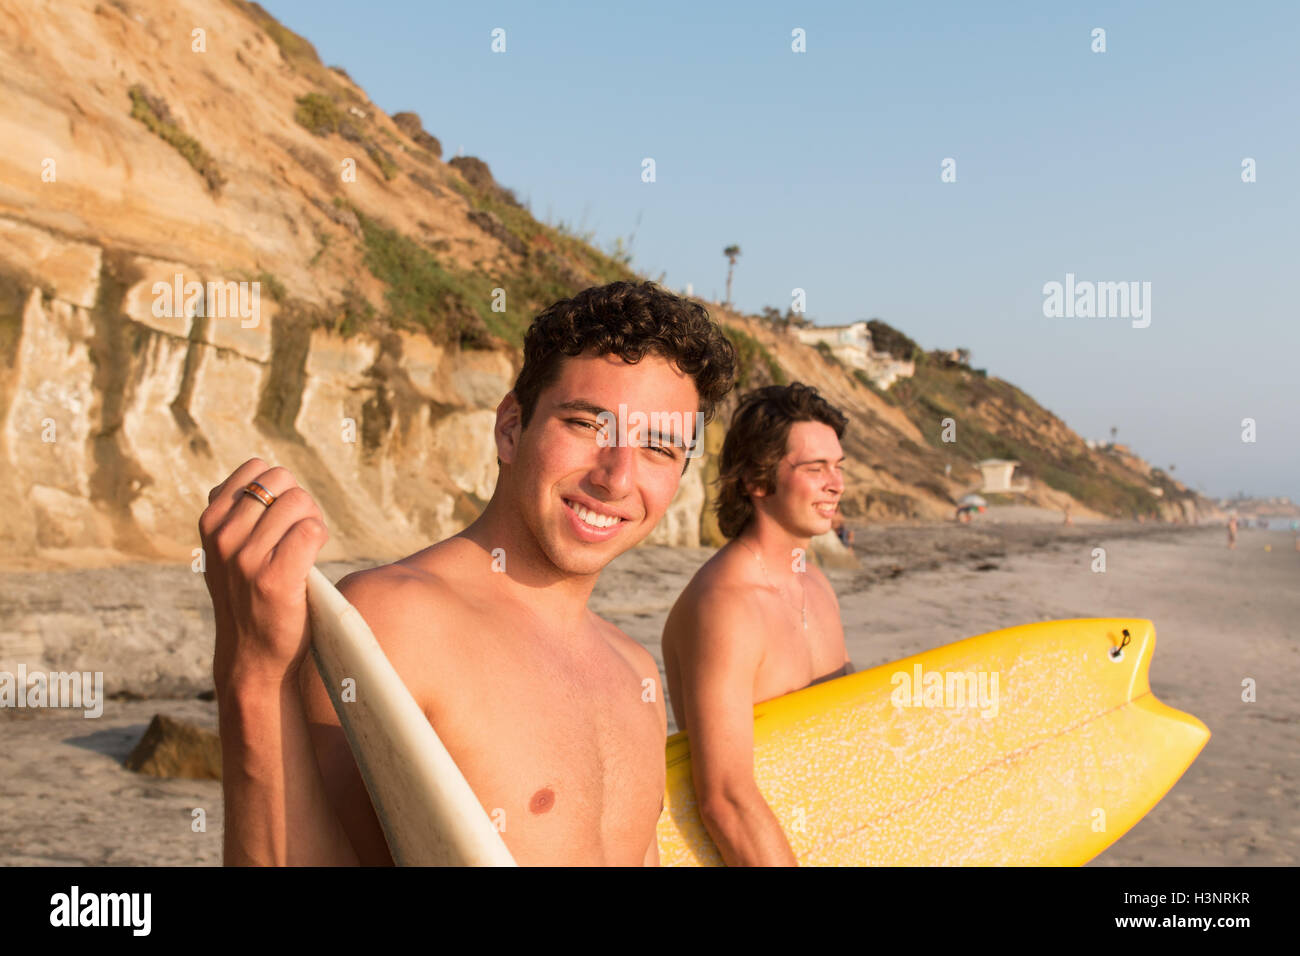 Zwei junge Männer am Strand, hält Surfbretter Stockfoto